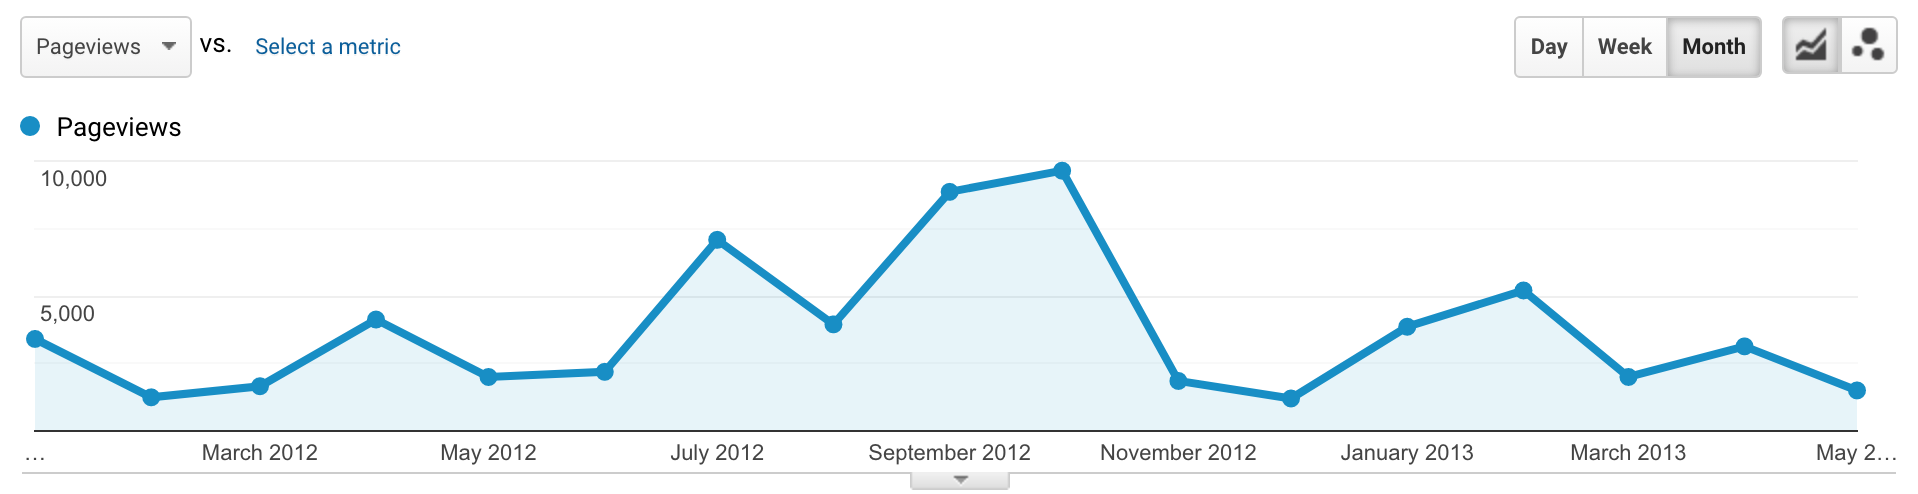 Web Analytics Trend line graph